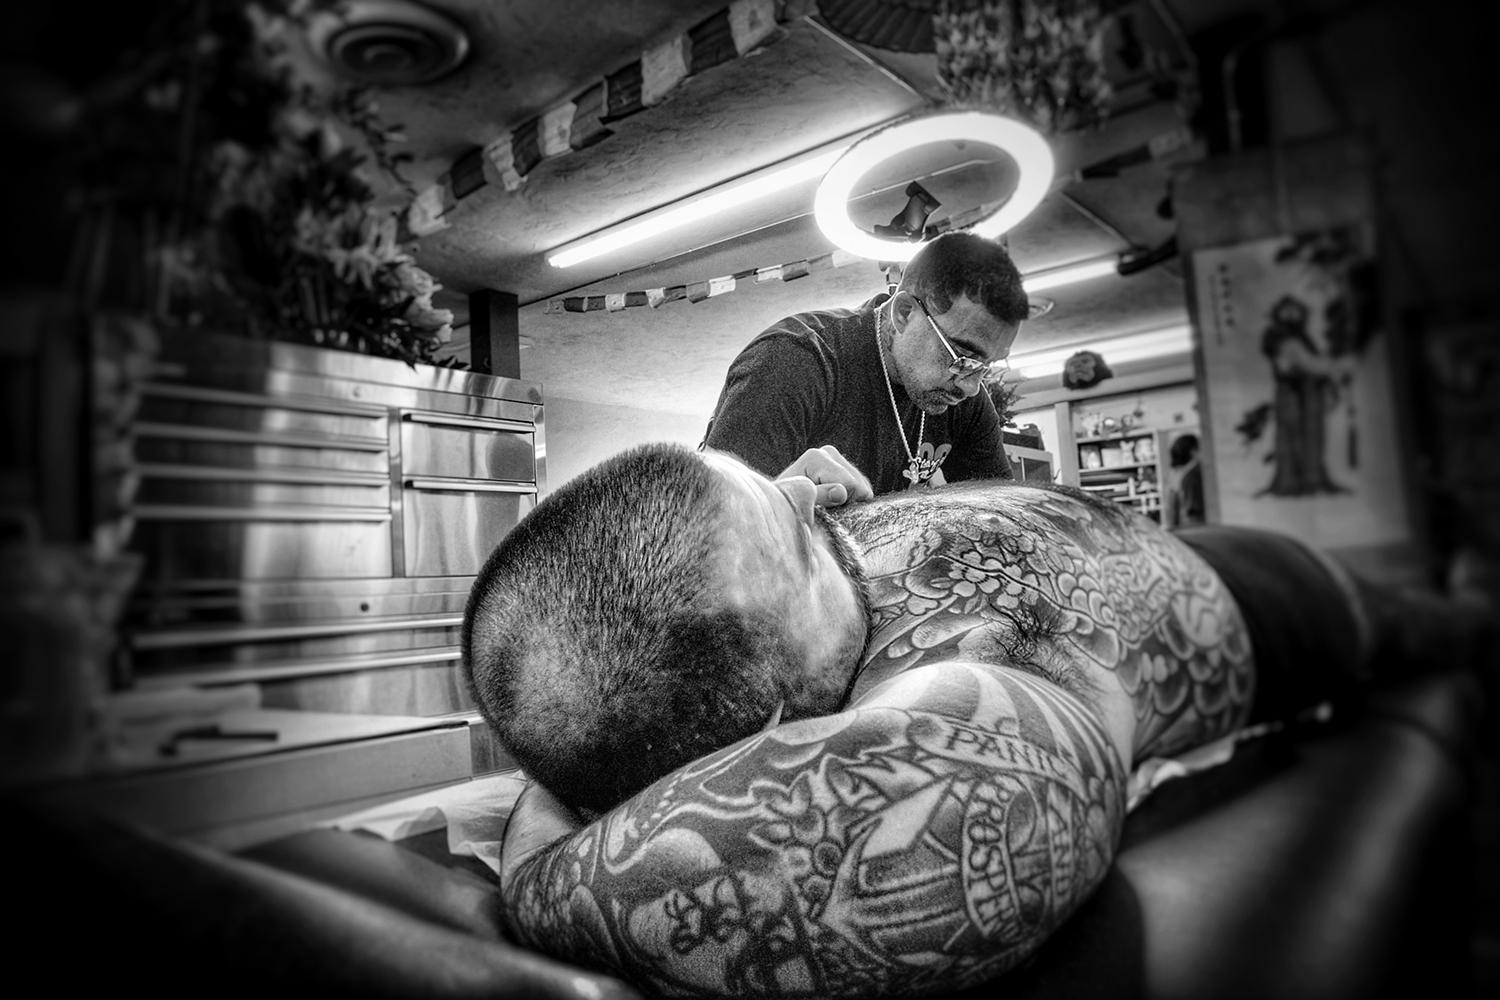 Doryu, a tattooer from the Bay Area, California